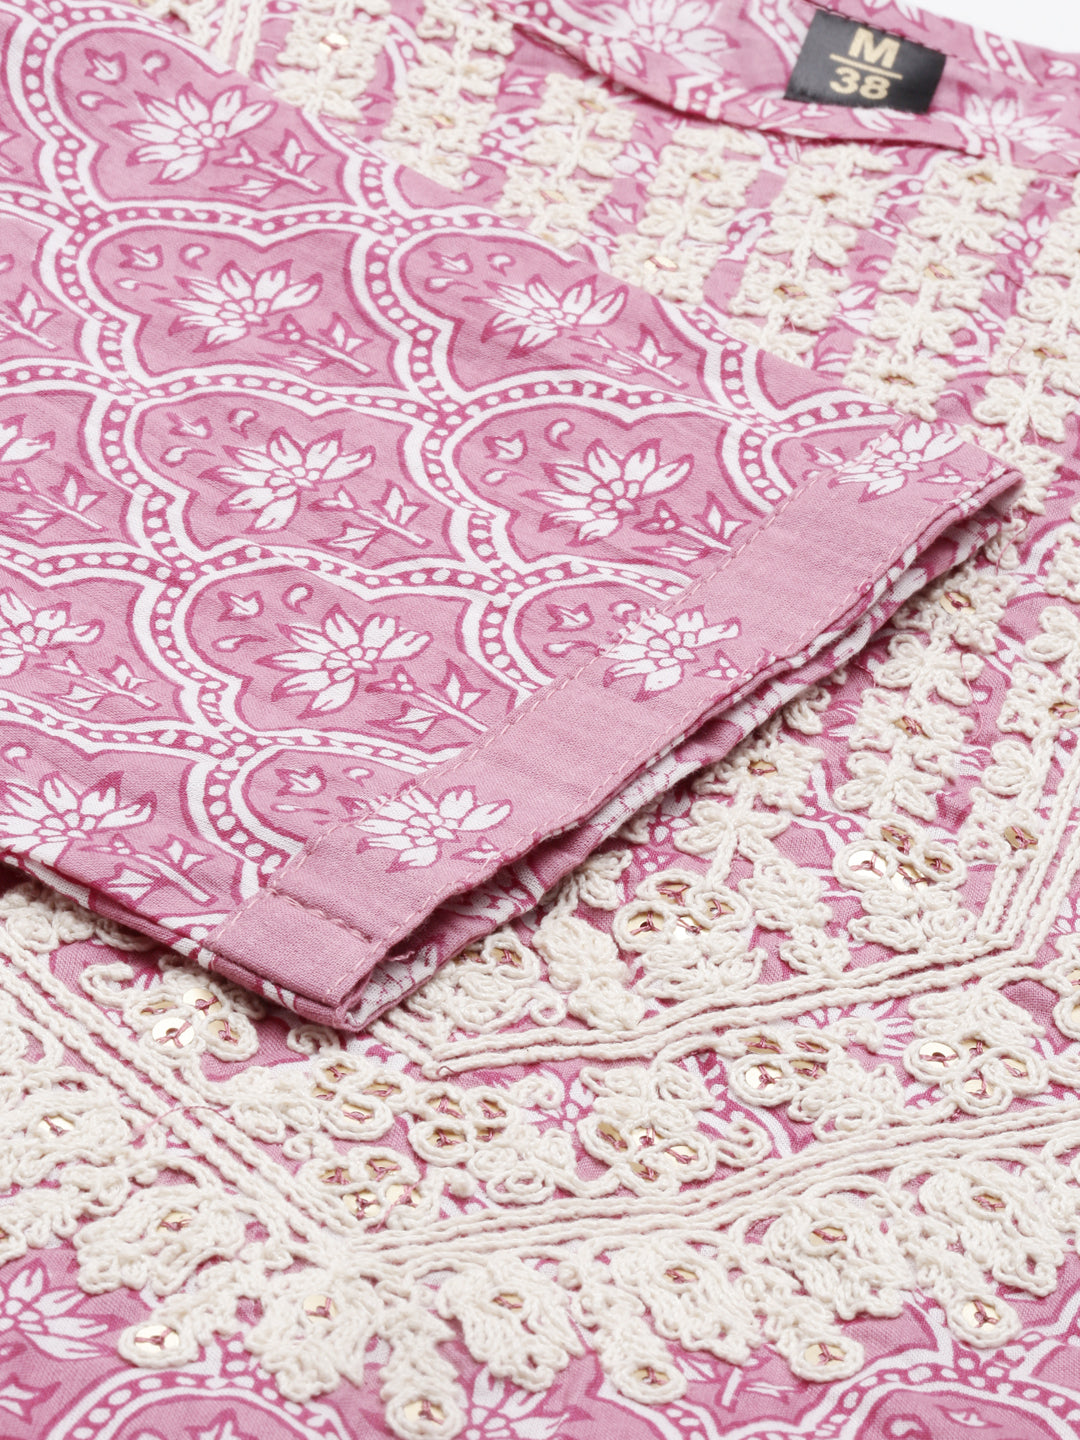 Neeru's Lavender Color Cotton Fabric Kurta